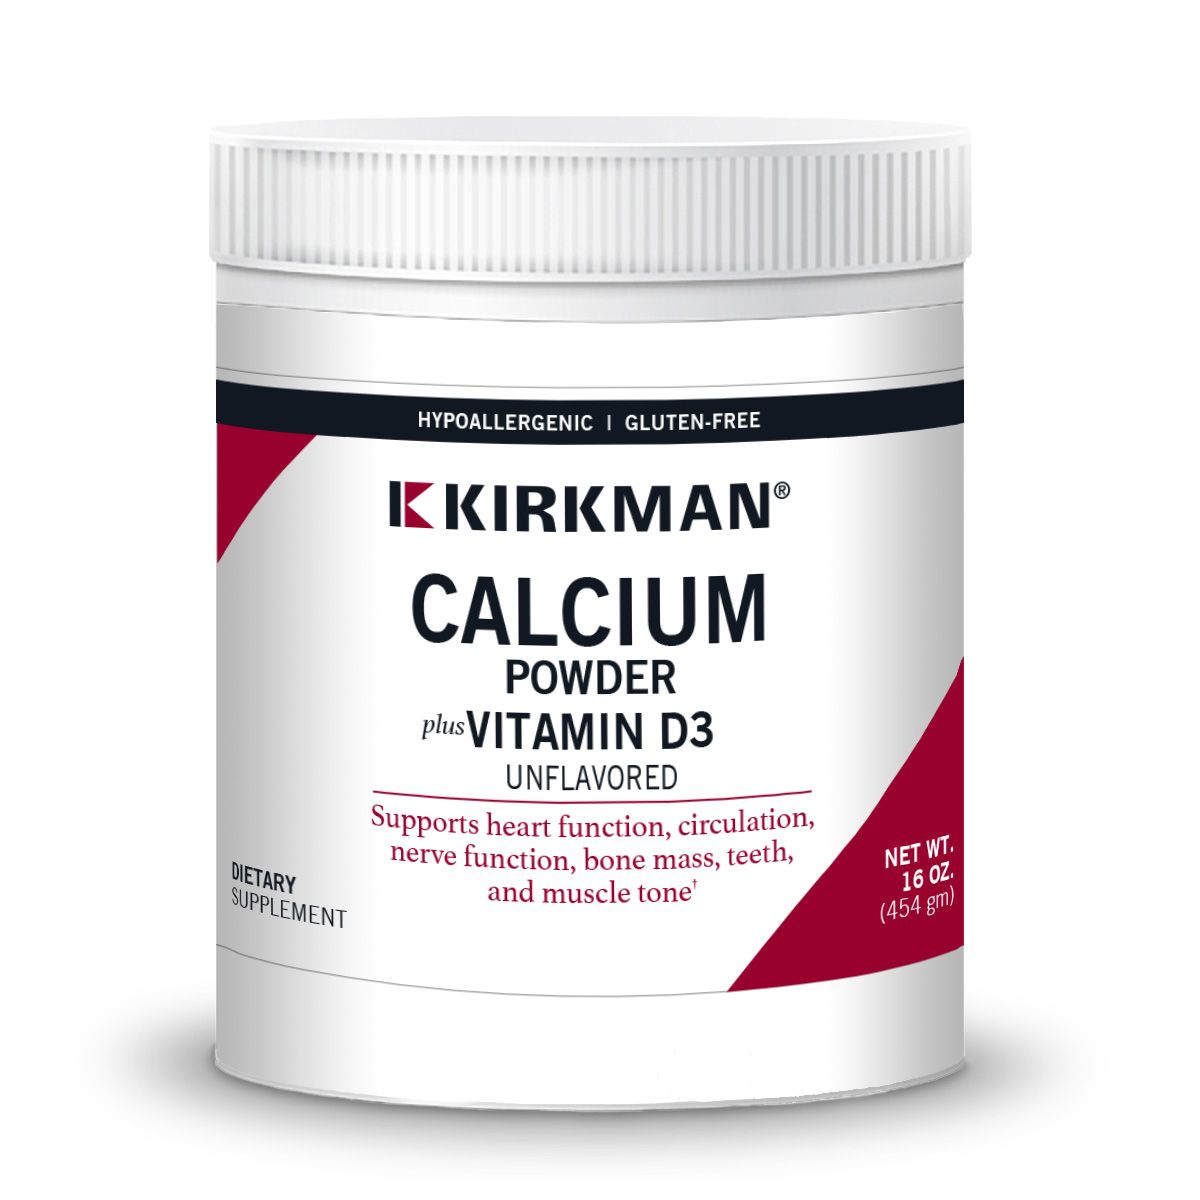 Calcium with Vitamin D-3 Powder - Unflavored - Hypoallergenic - 16 oz.